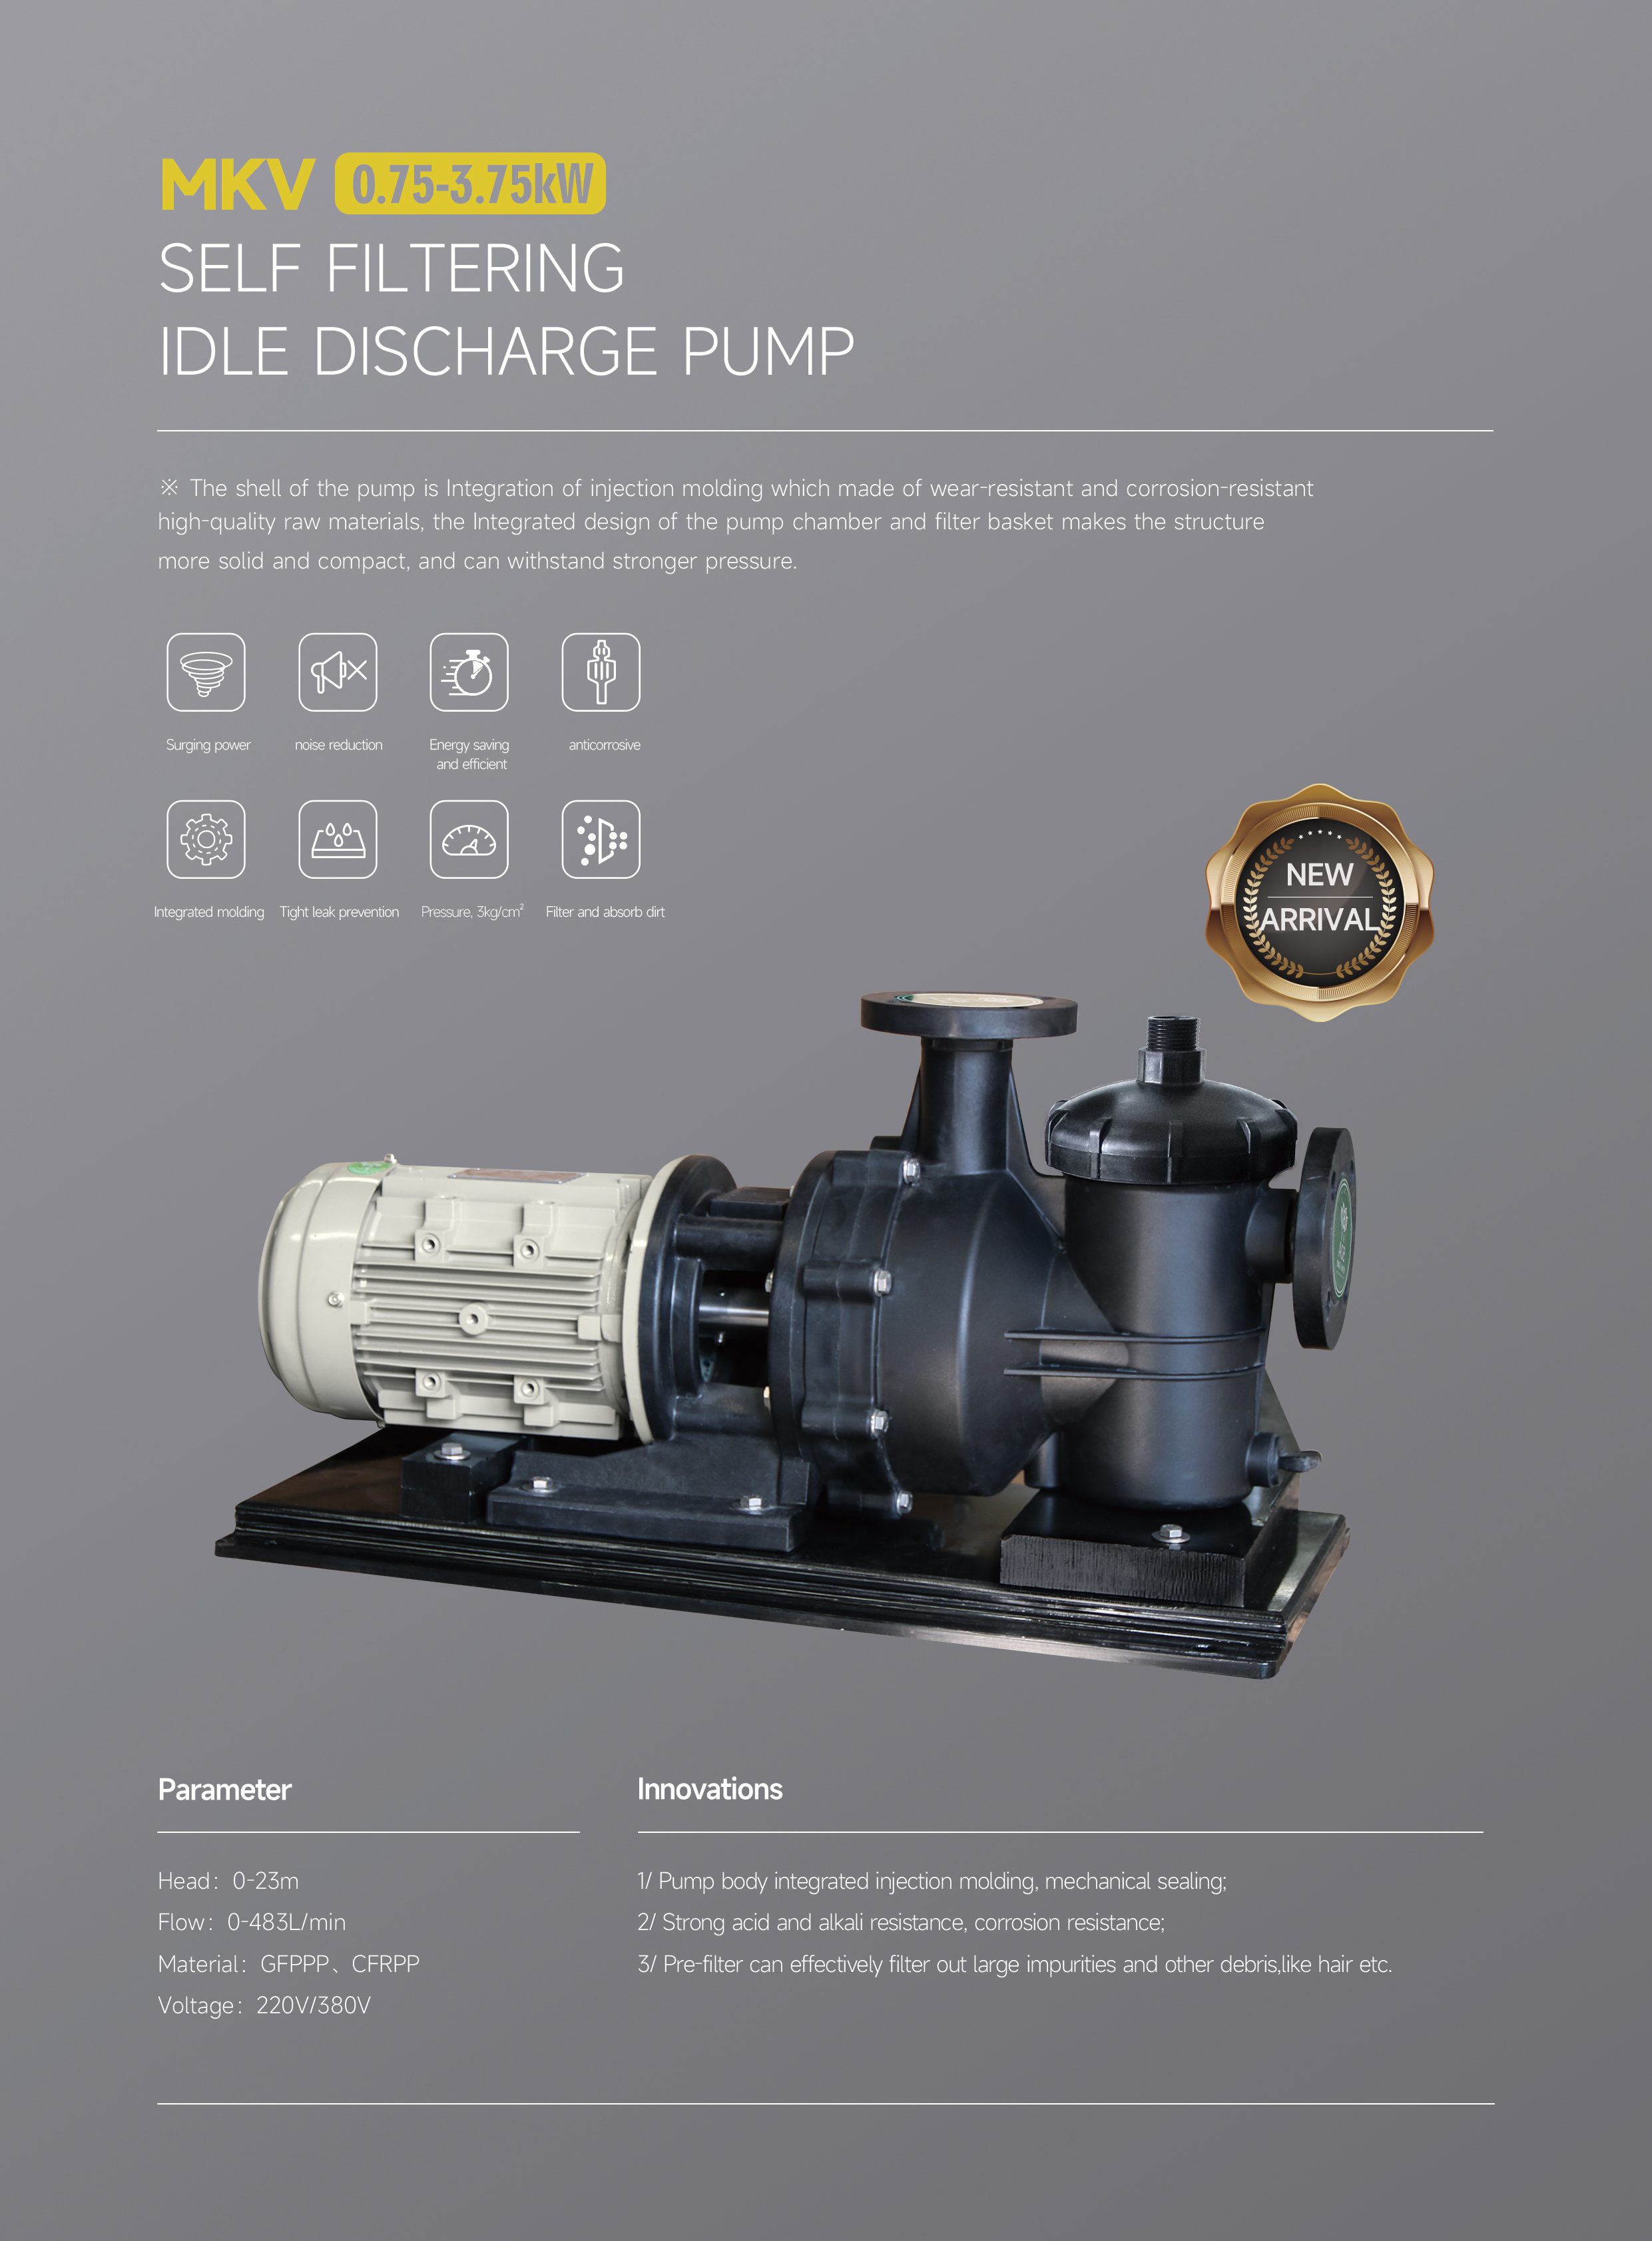 self filtering idle discharge pump(自过滤空转卸料泵).jpg